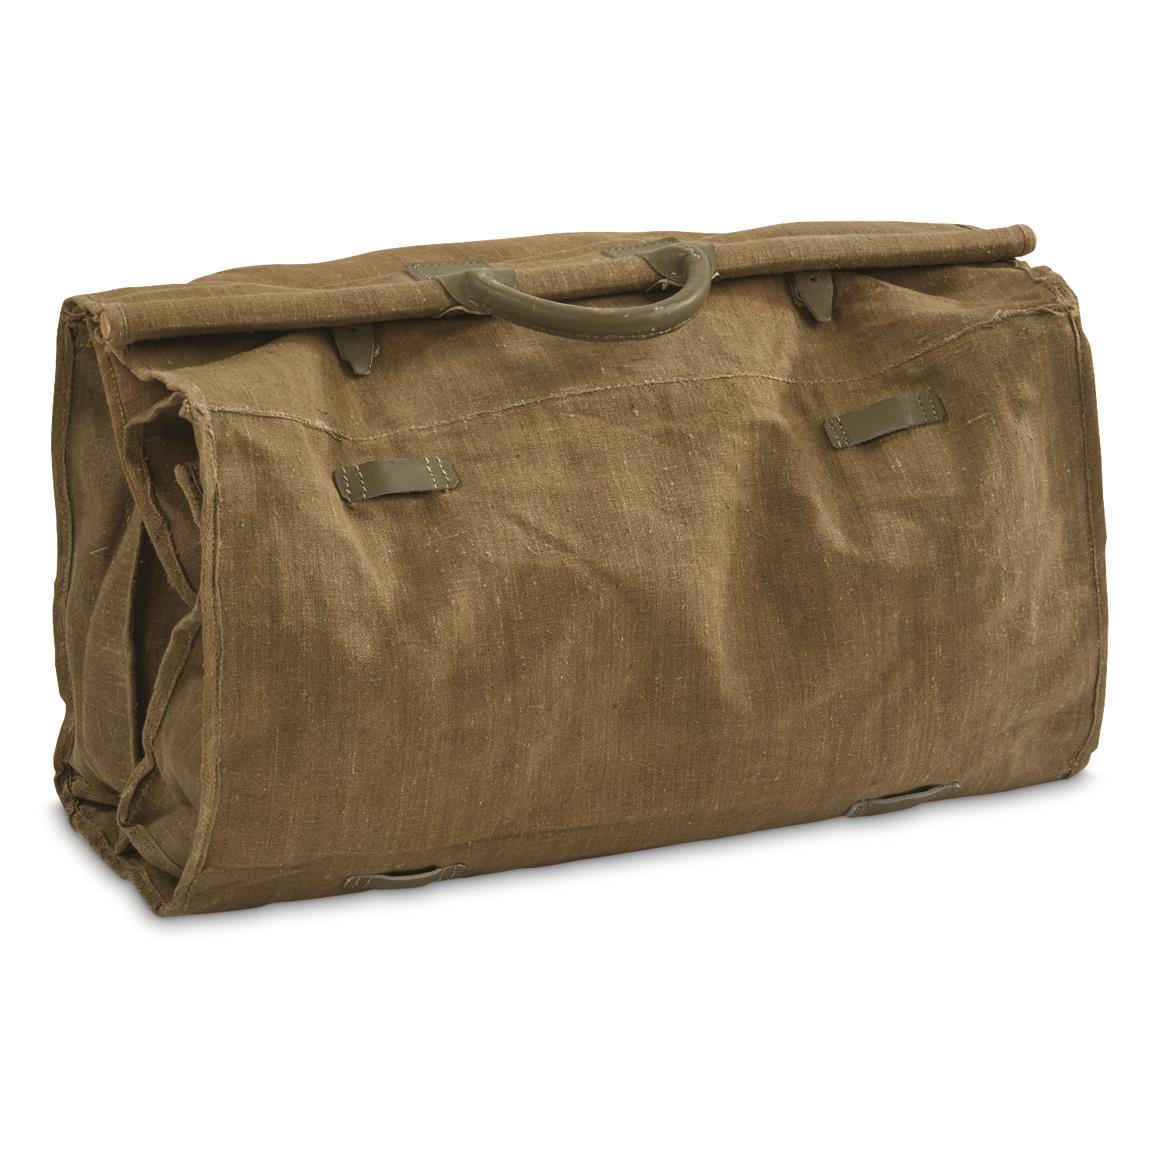 U.S. Military Surplus Extra Large Transport Bag, New - 697221, Military ...